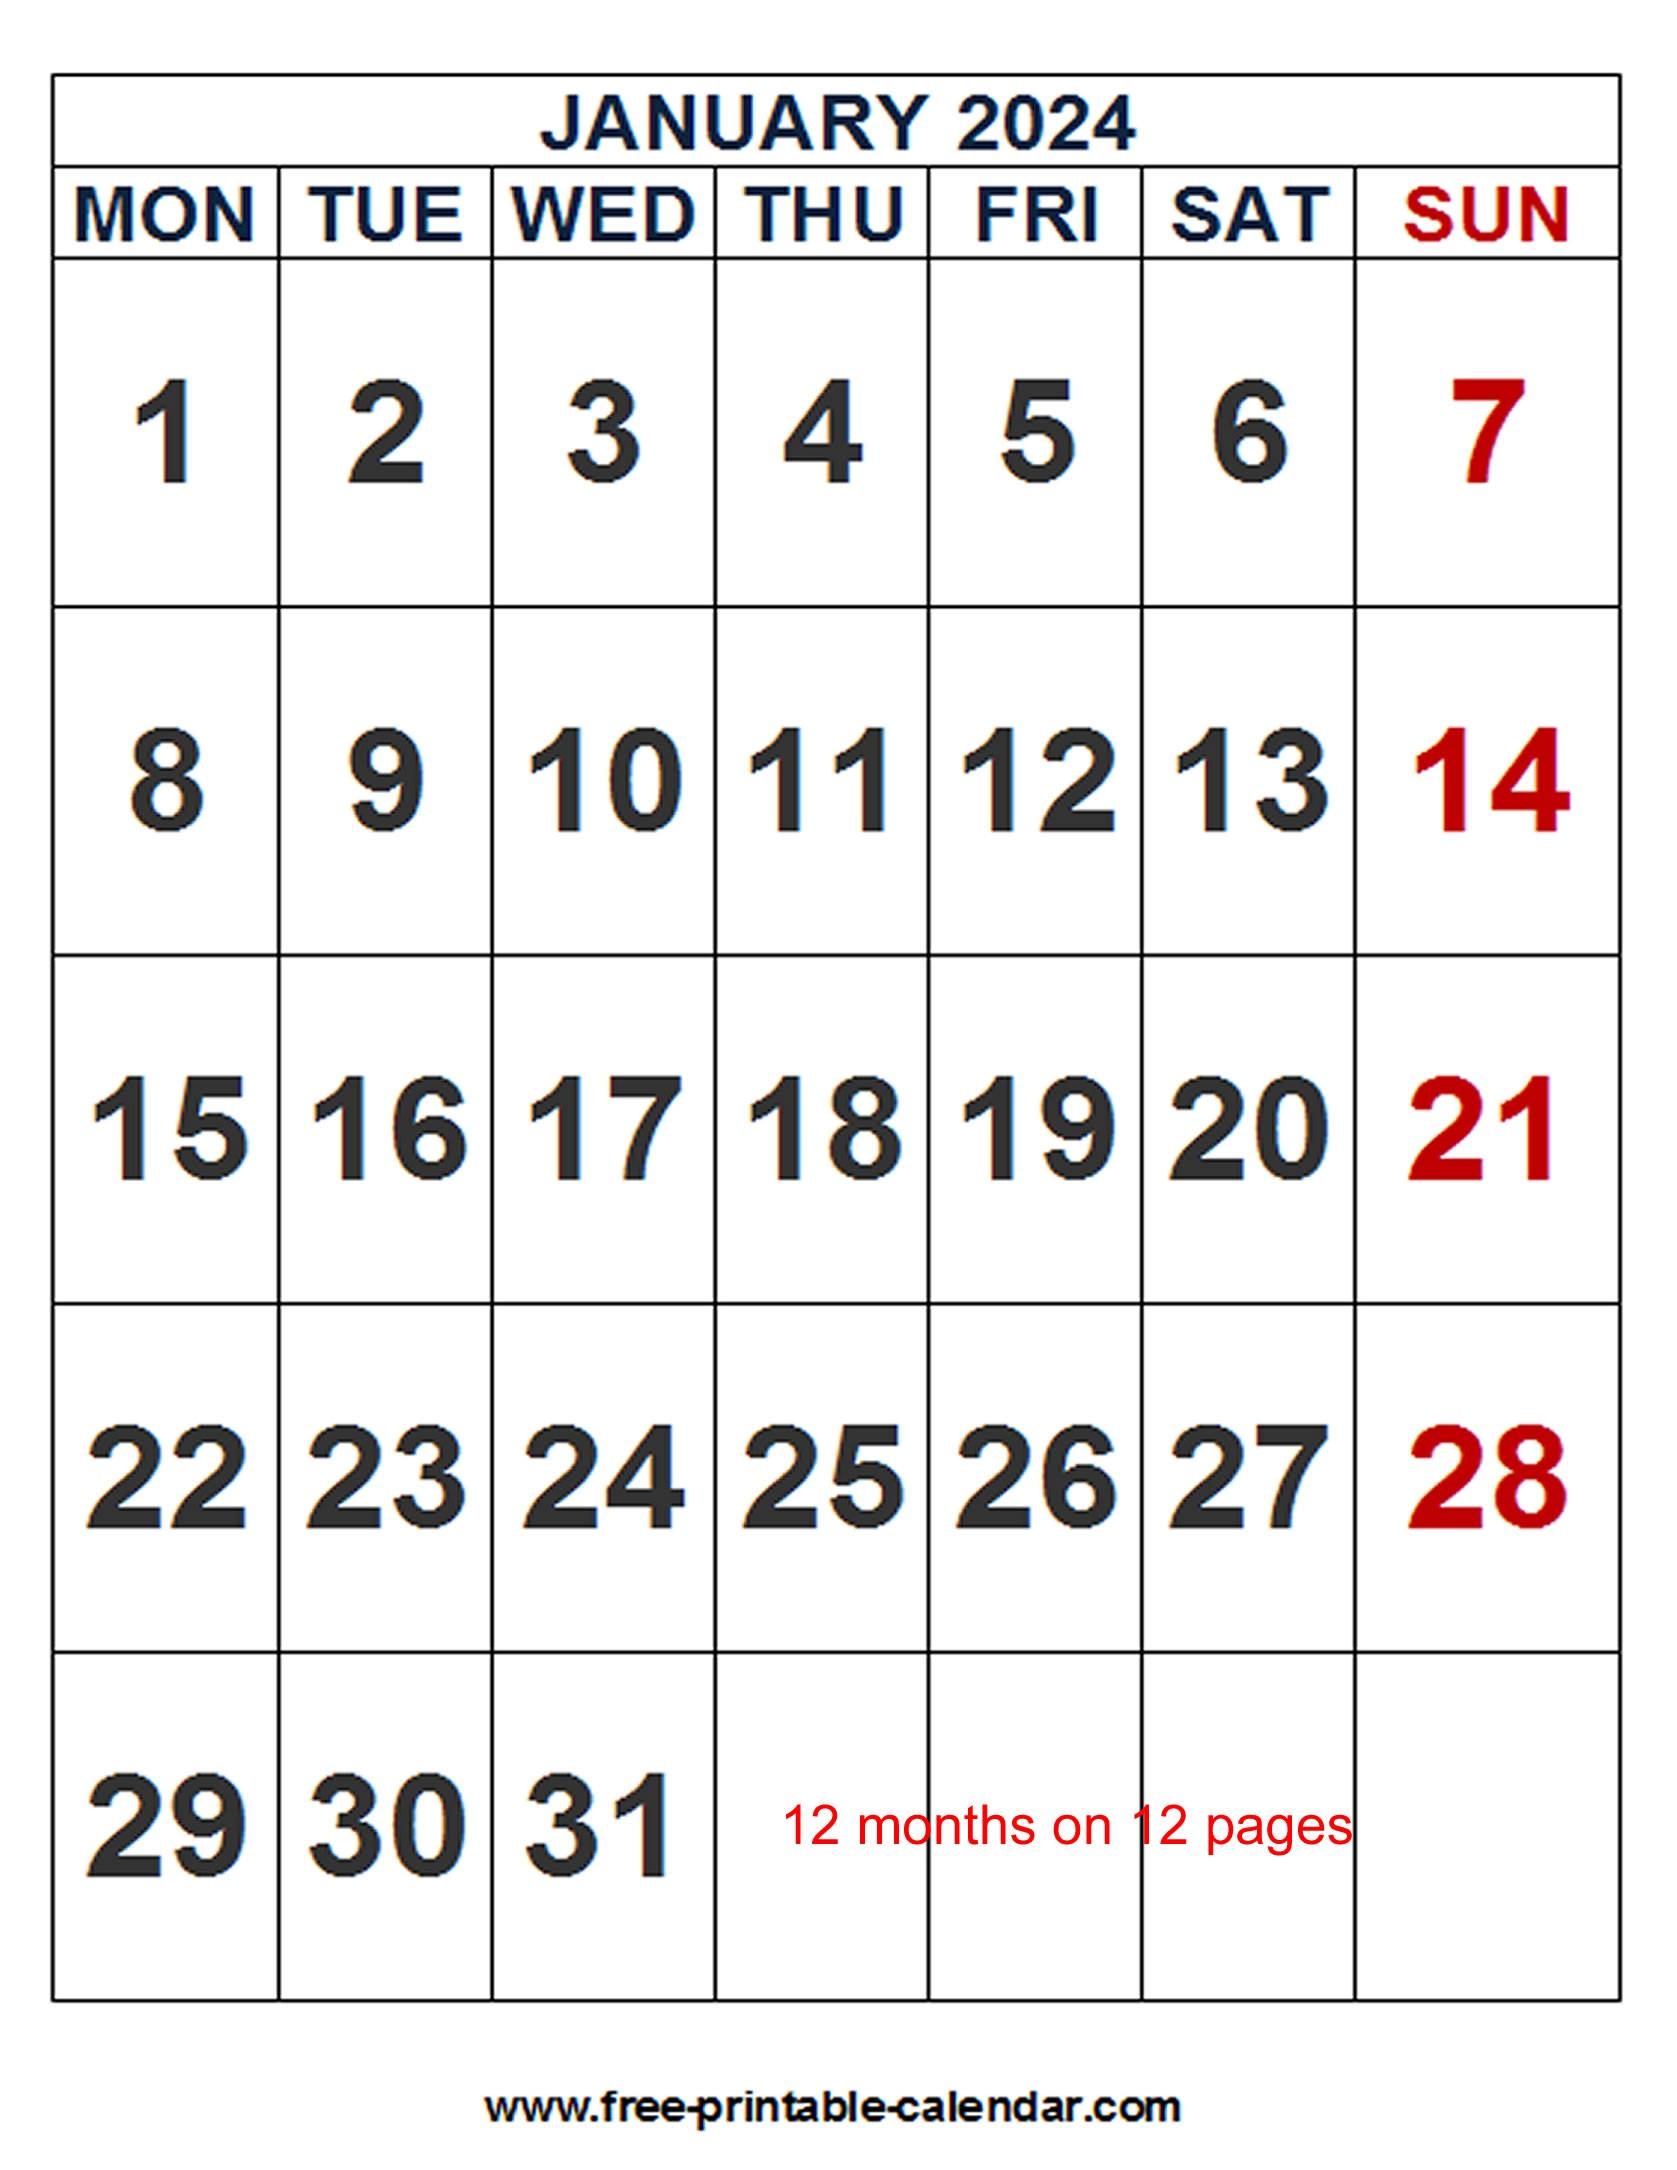 2024 Calendar Word Template - Free-Printable-Calendar in Free Printable Calendar 2024 In Word